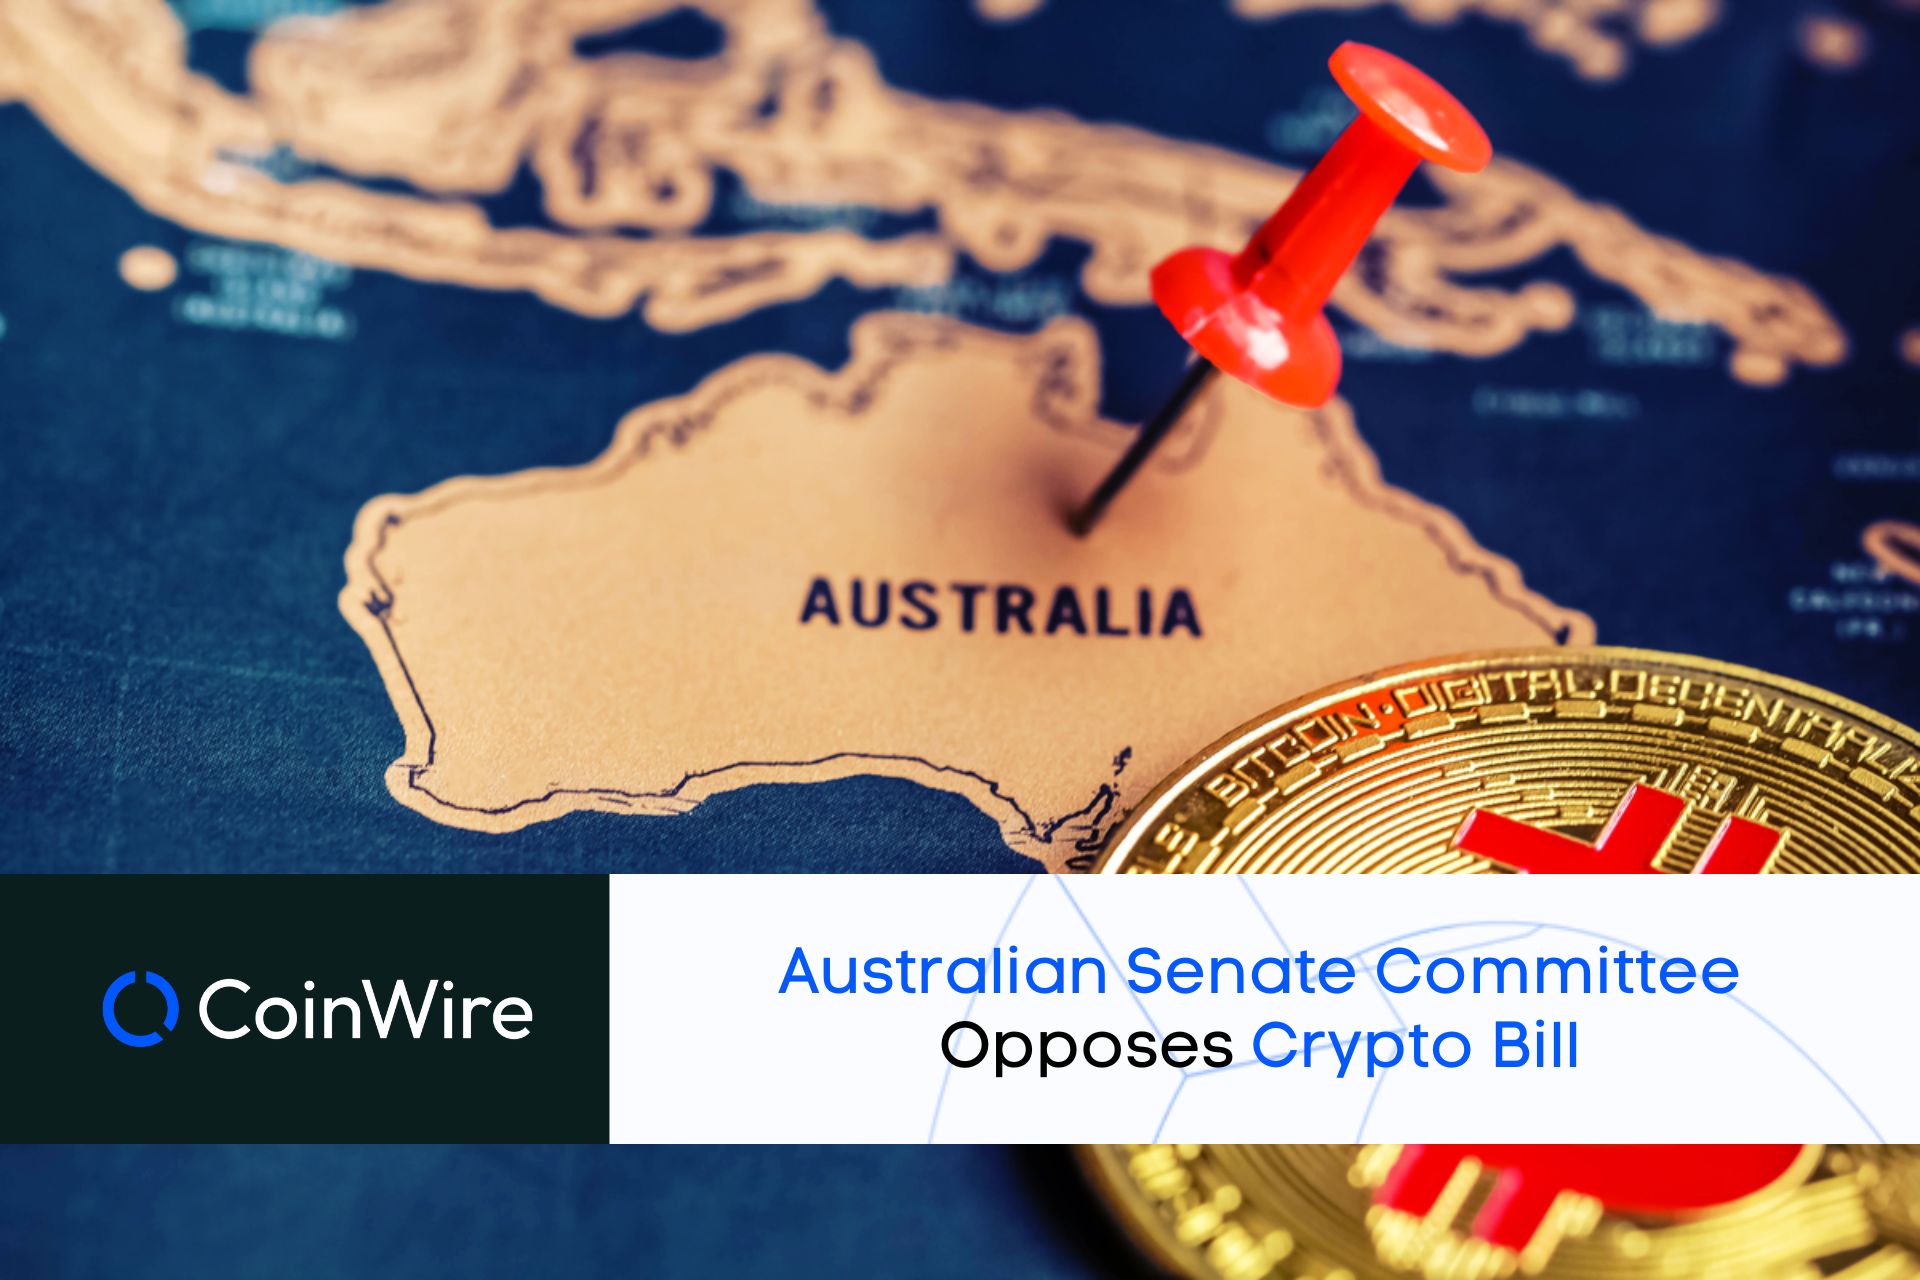 Australian Senate Committee Opposes Crypto Bill, Posing Legislative Roadblock